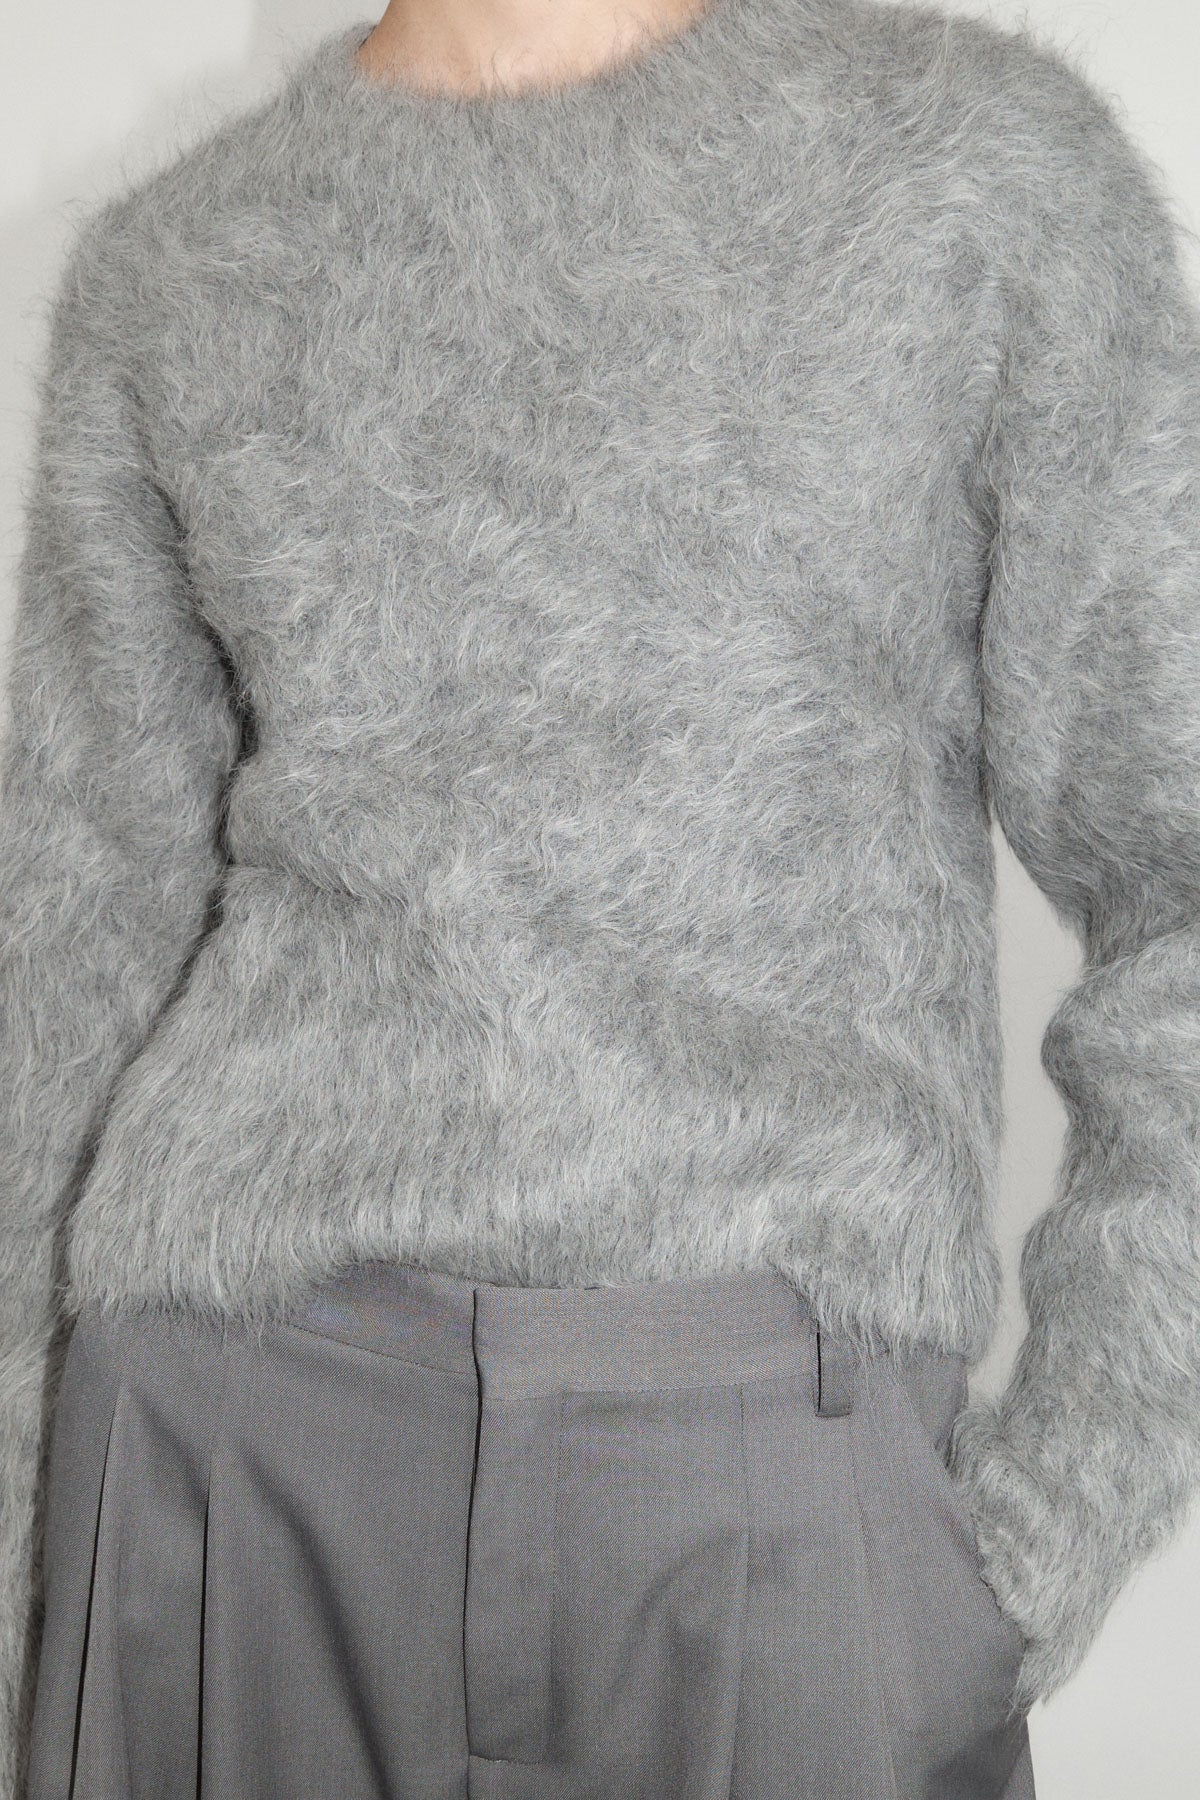 Alpaca Sweater - Soft Grey